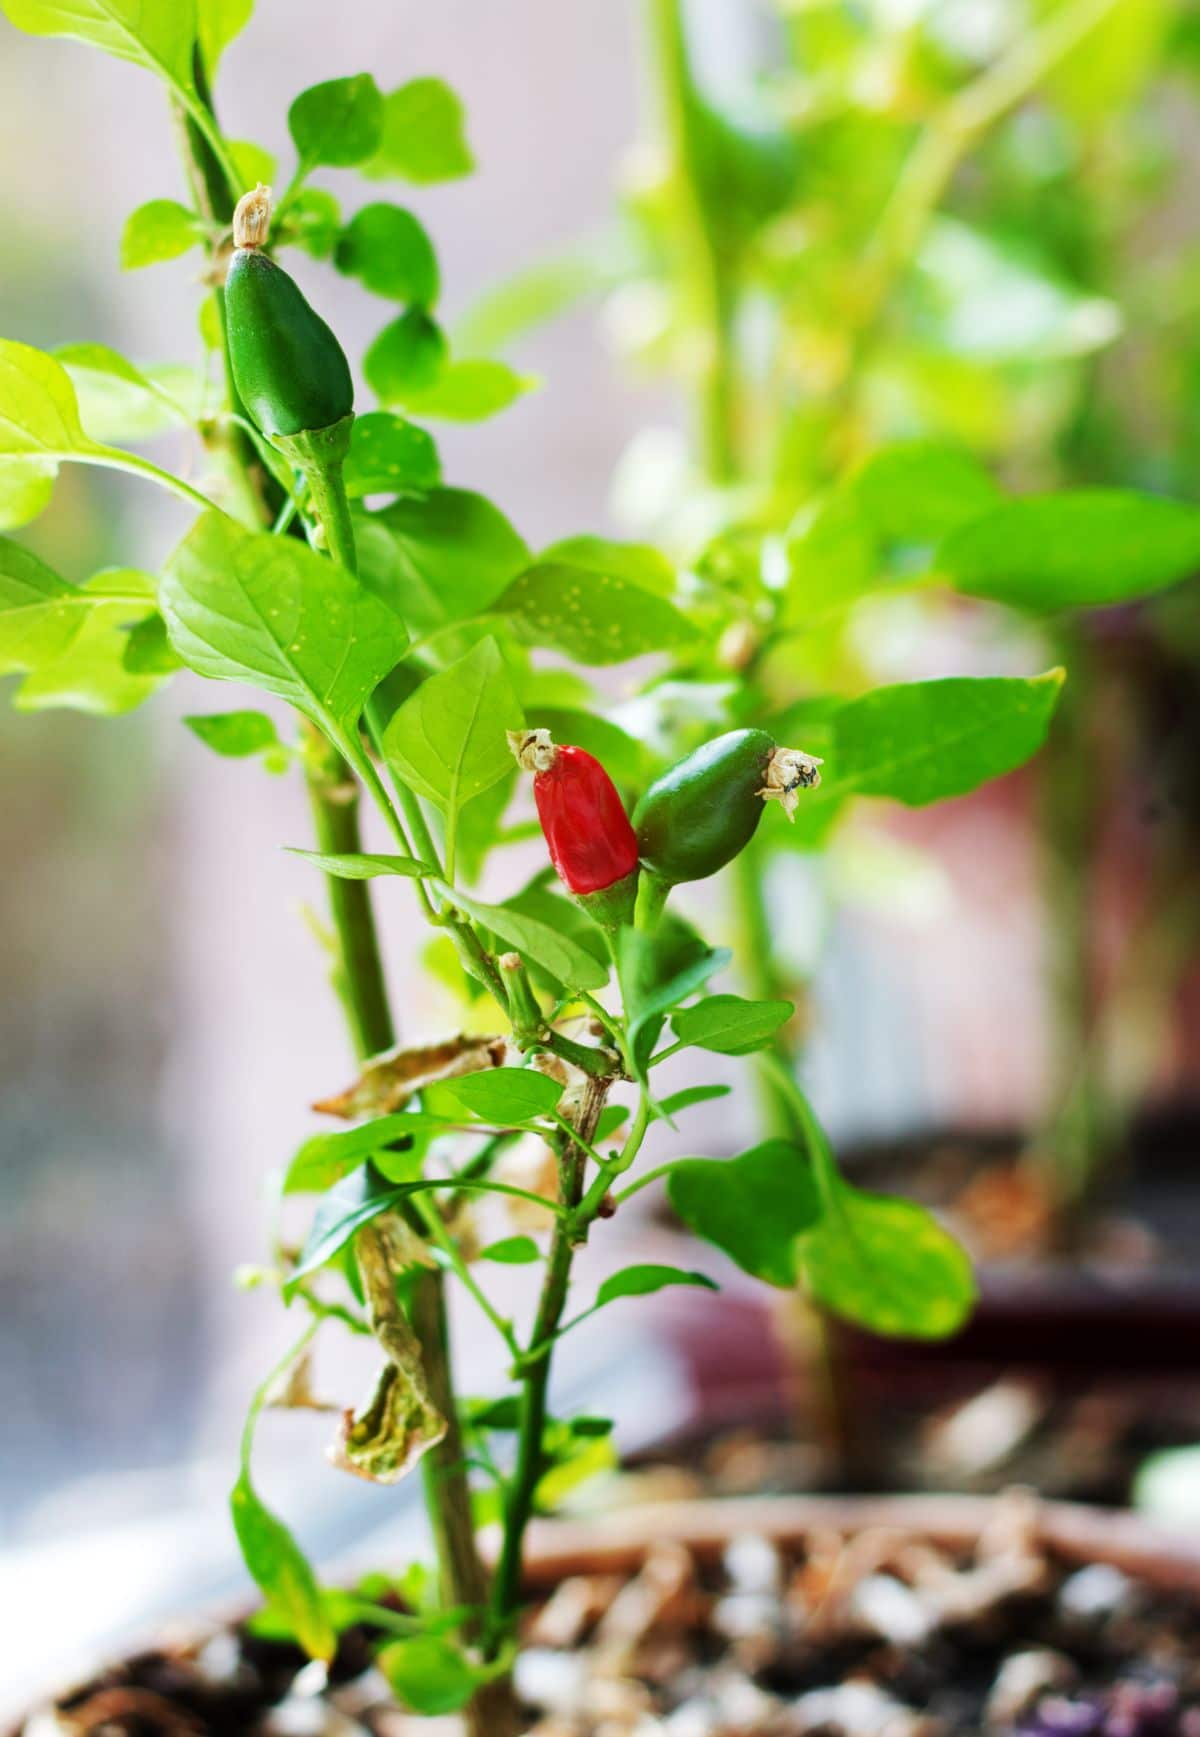 chili pepper growing in a pot in a windowsill